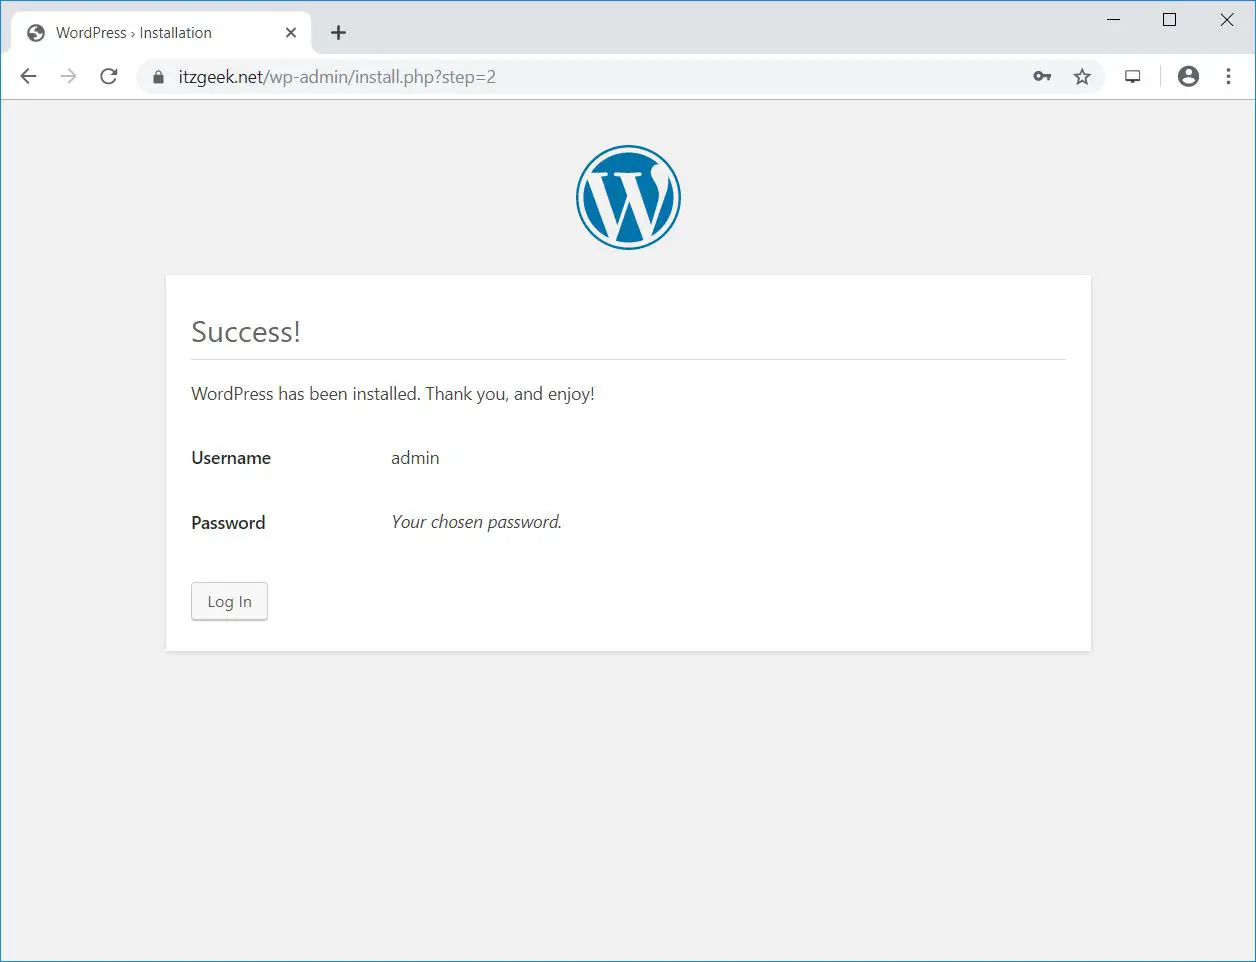 WordPress Installation Completed